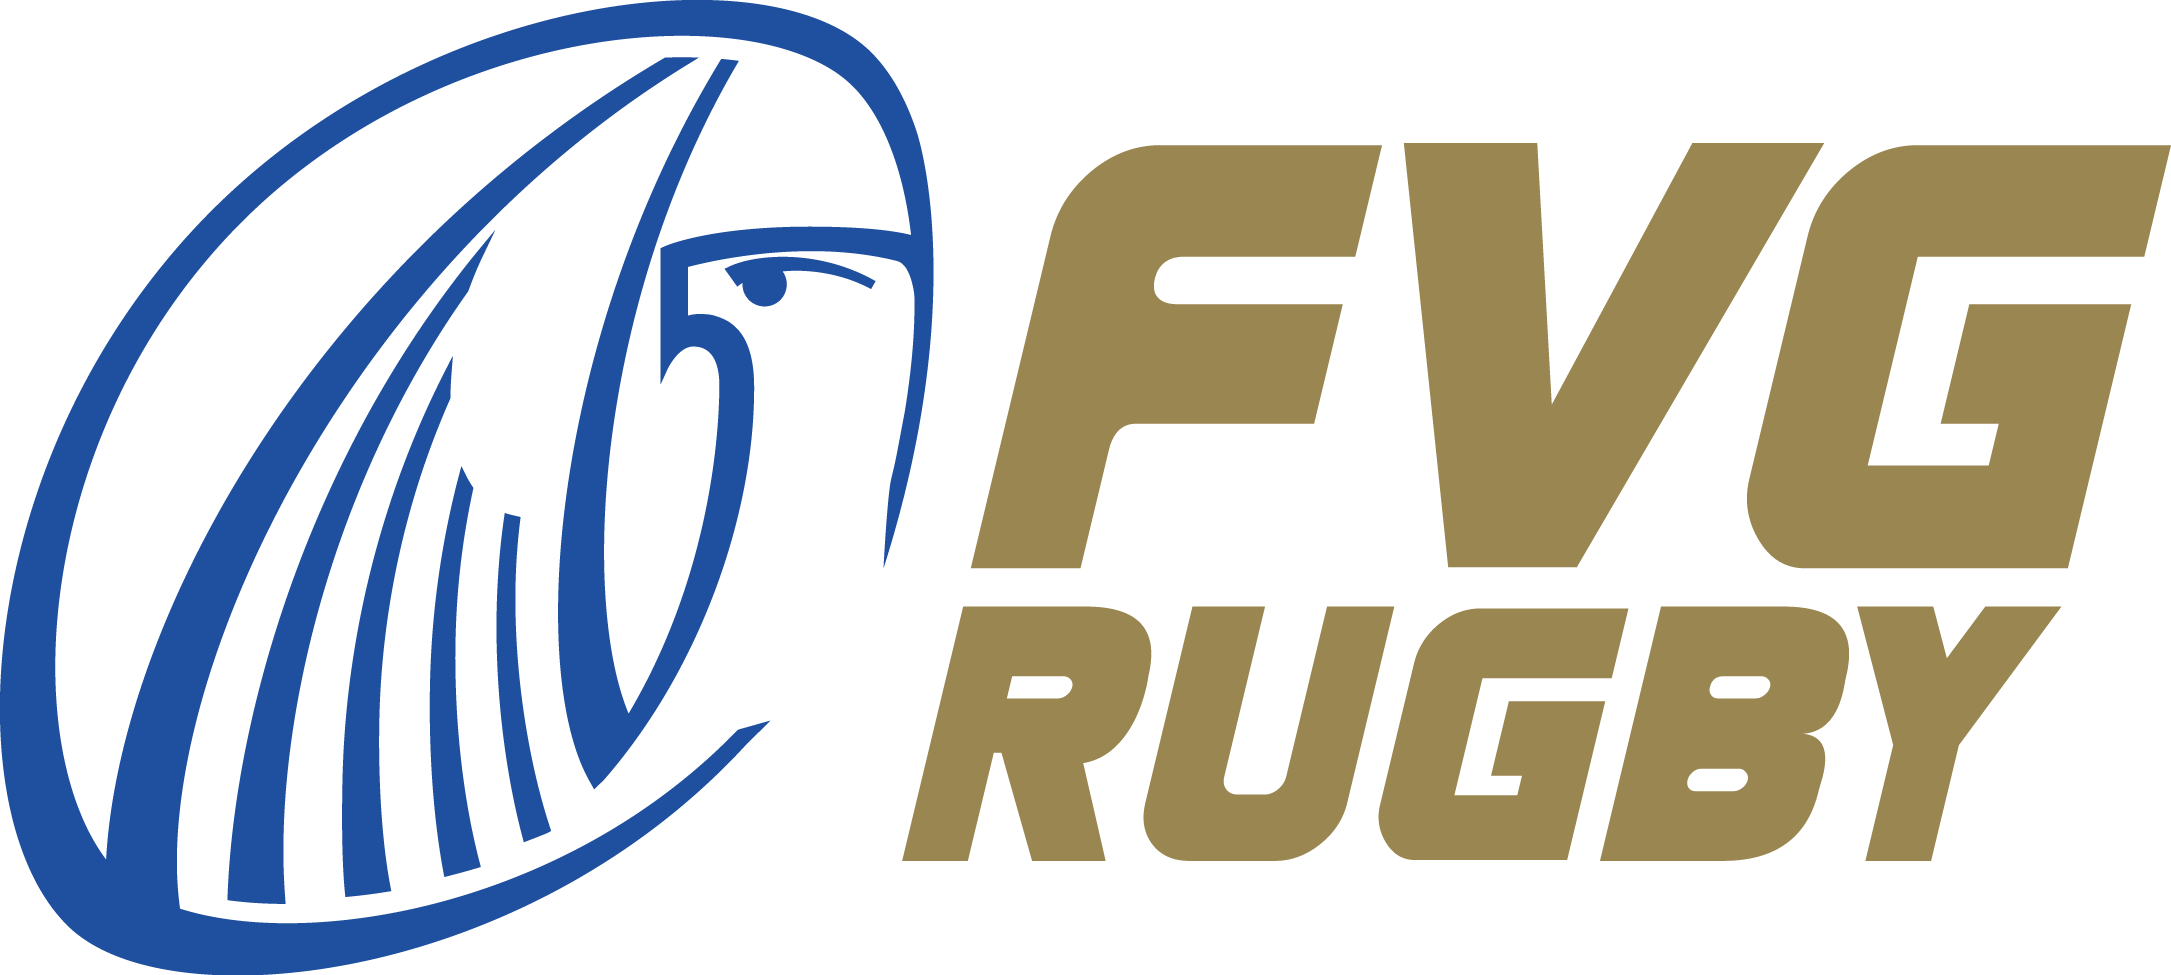 FVG RUGBY logo